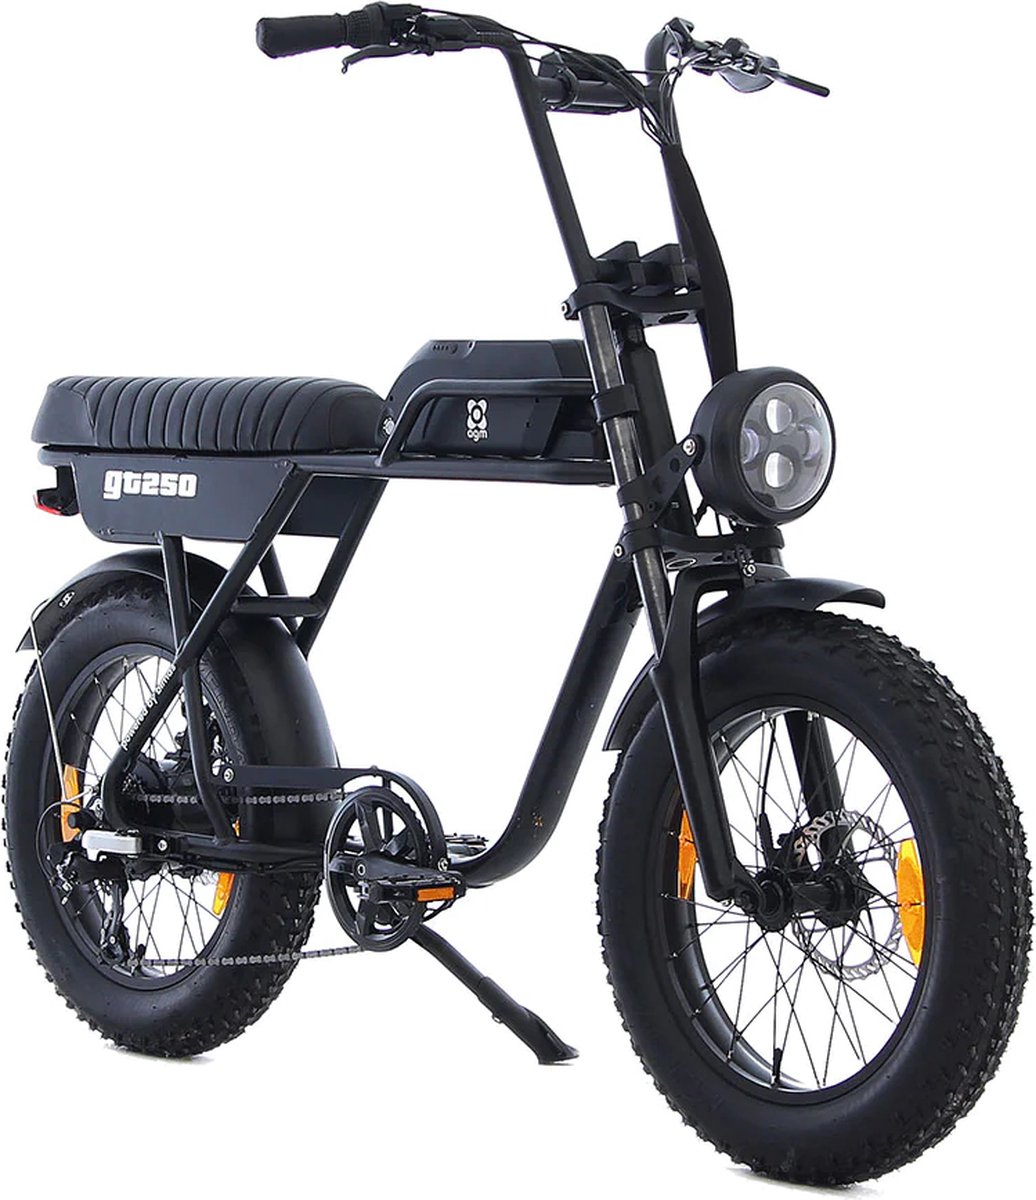 AGM GT250 - Fatbike - zwart - 25km/u - 2 jaar garantie! (8720254000121)